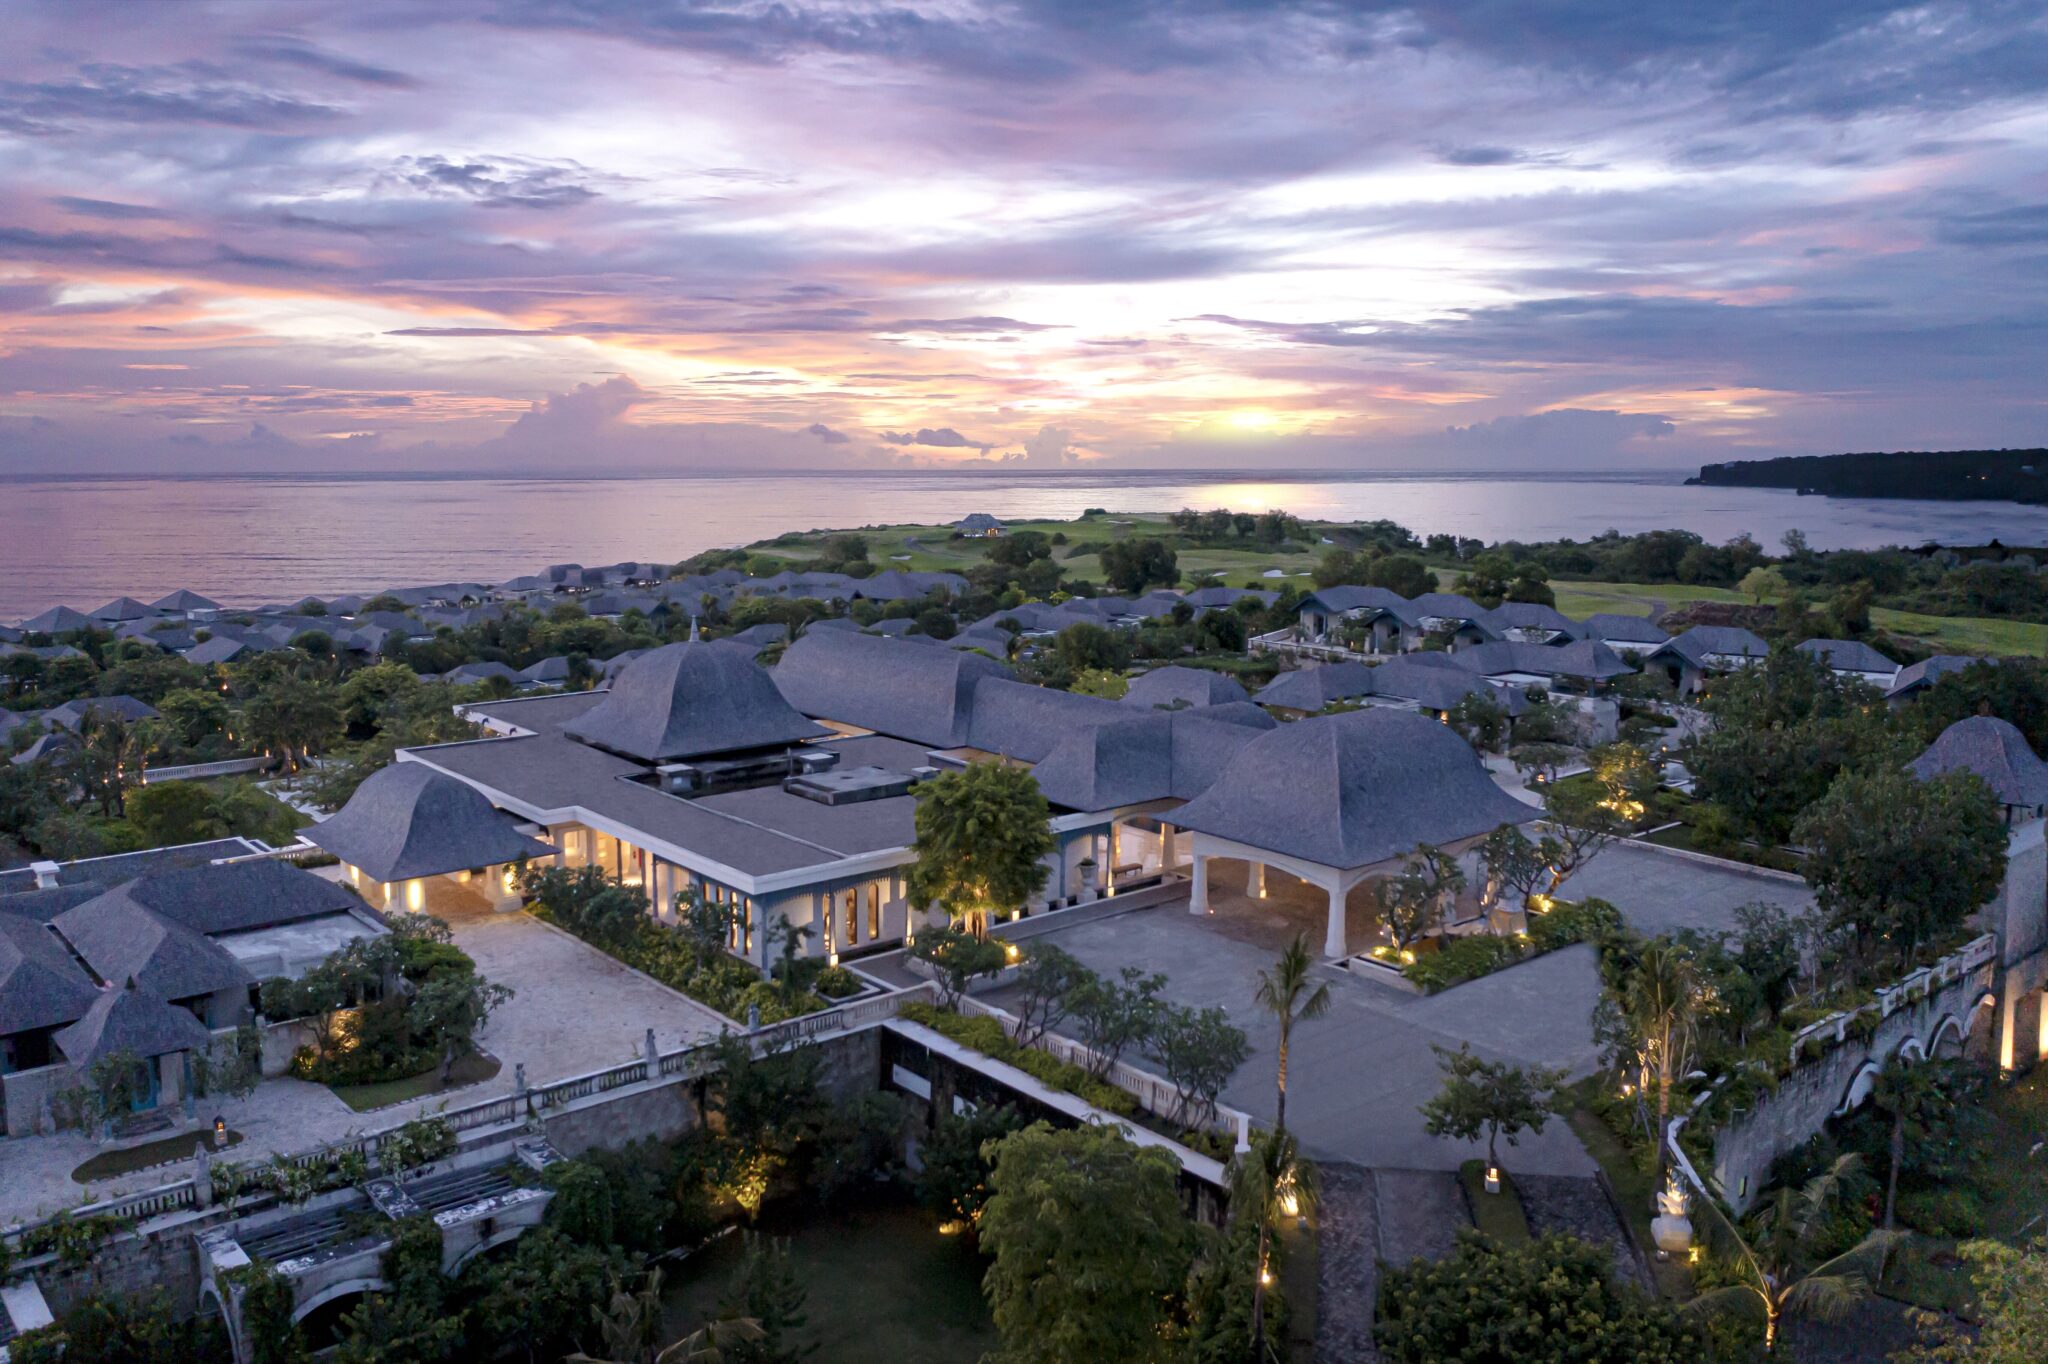 High resolution 300dpi Jumeirah Bali Resort Ocean View scaled